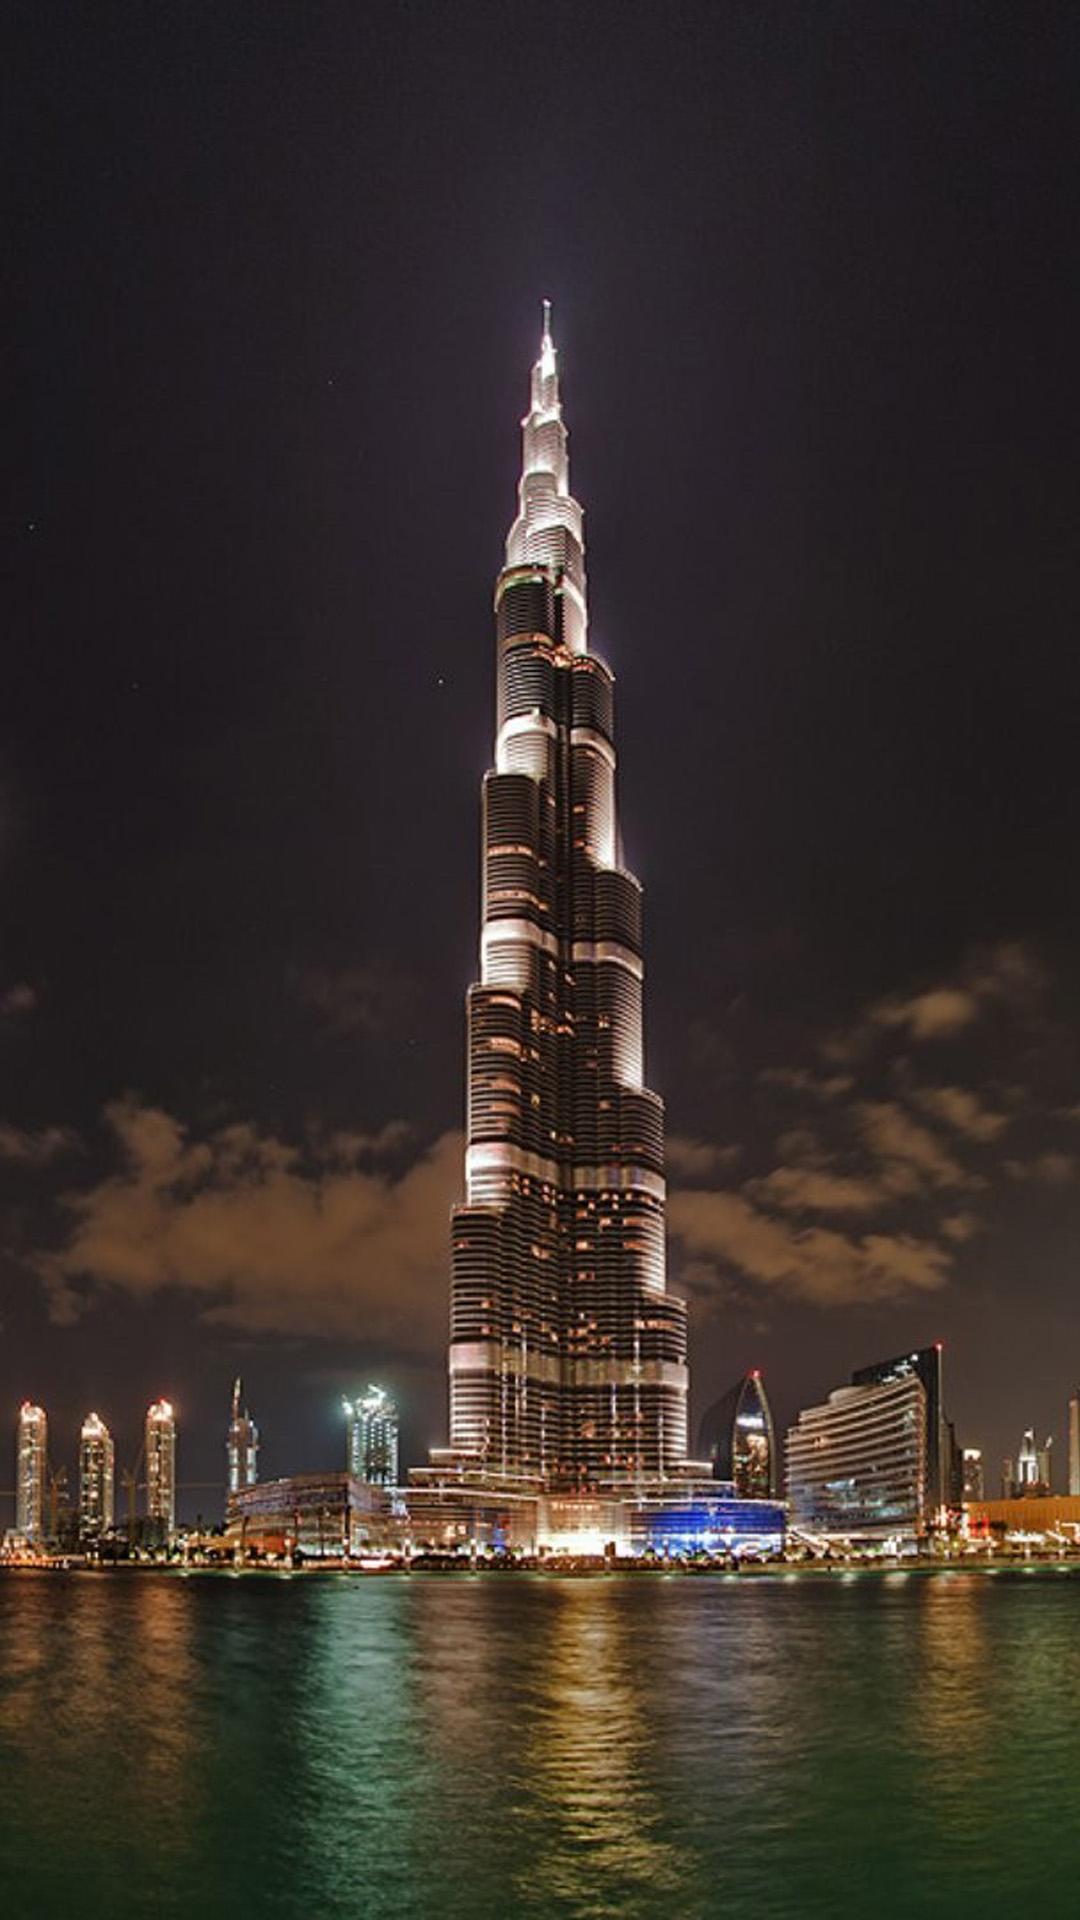 Burj Khalifa Tower At Night iPhone 8 Wallpaper Free Download